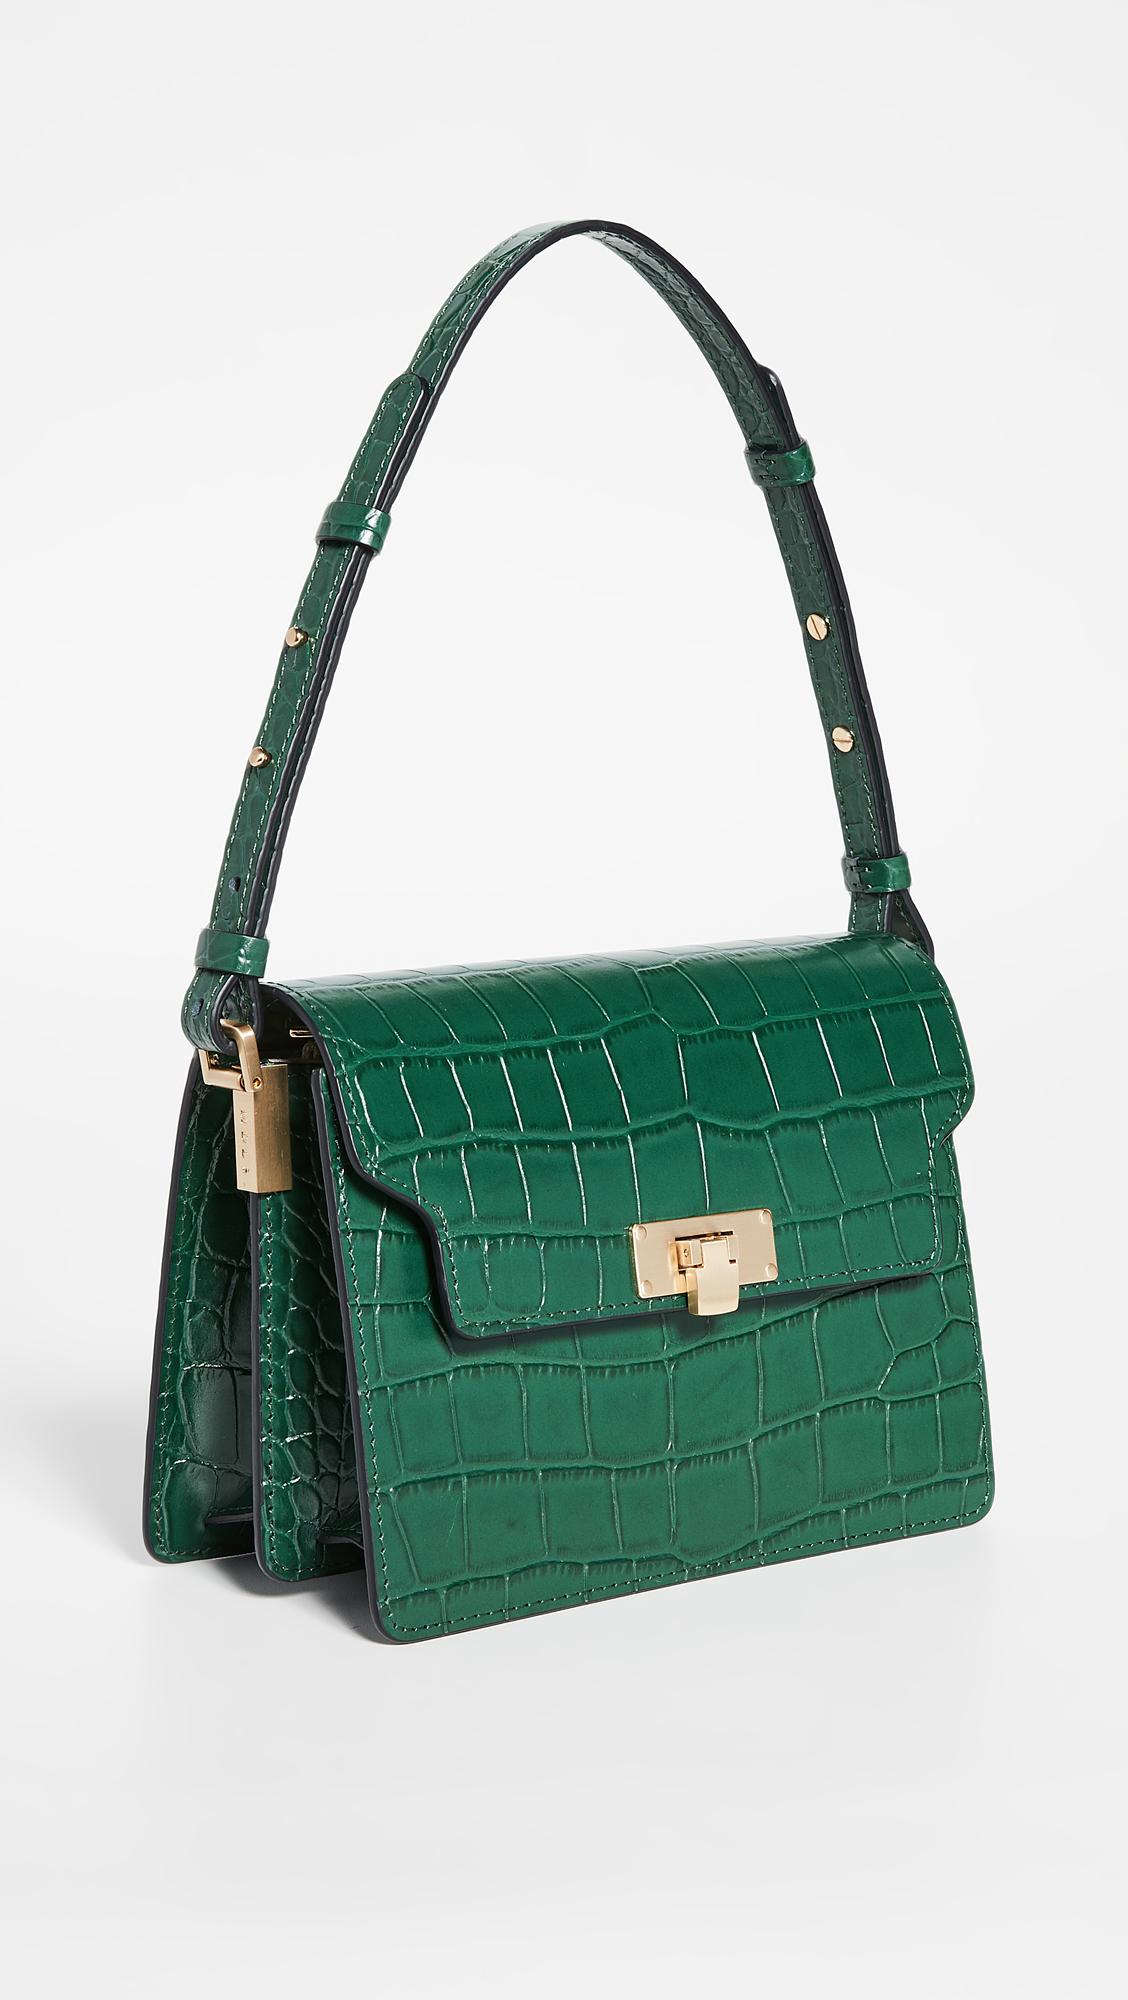 Marge Sherwood Leather Vintage Brick Bag in Green Croc (Green) - Lyst